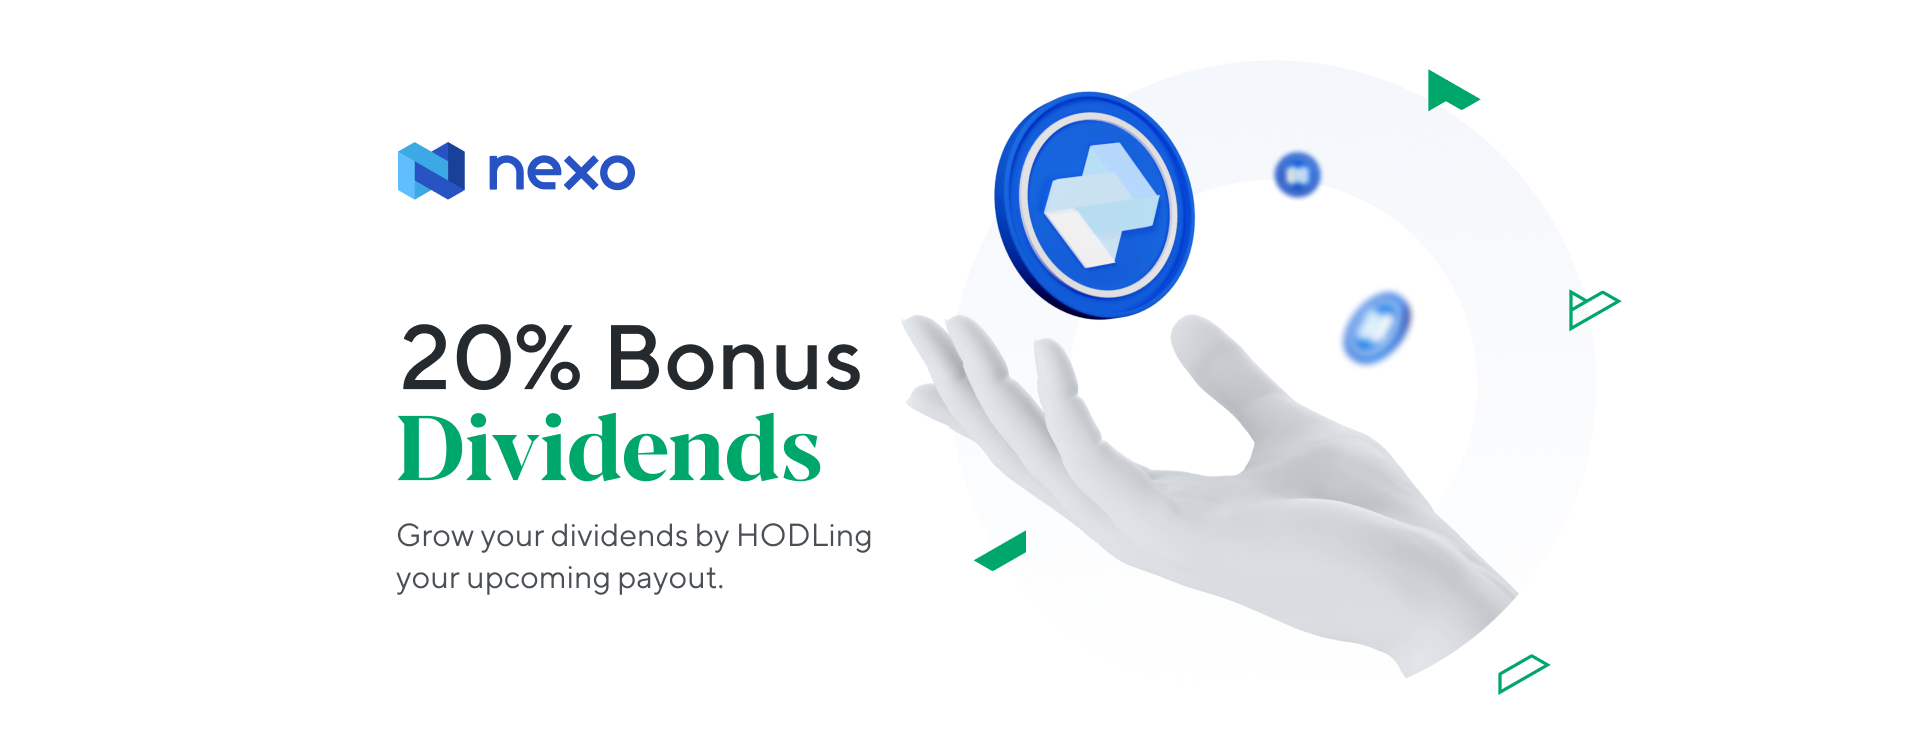 Get 20% More with Nexo’s Bonus Dividend!